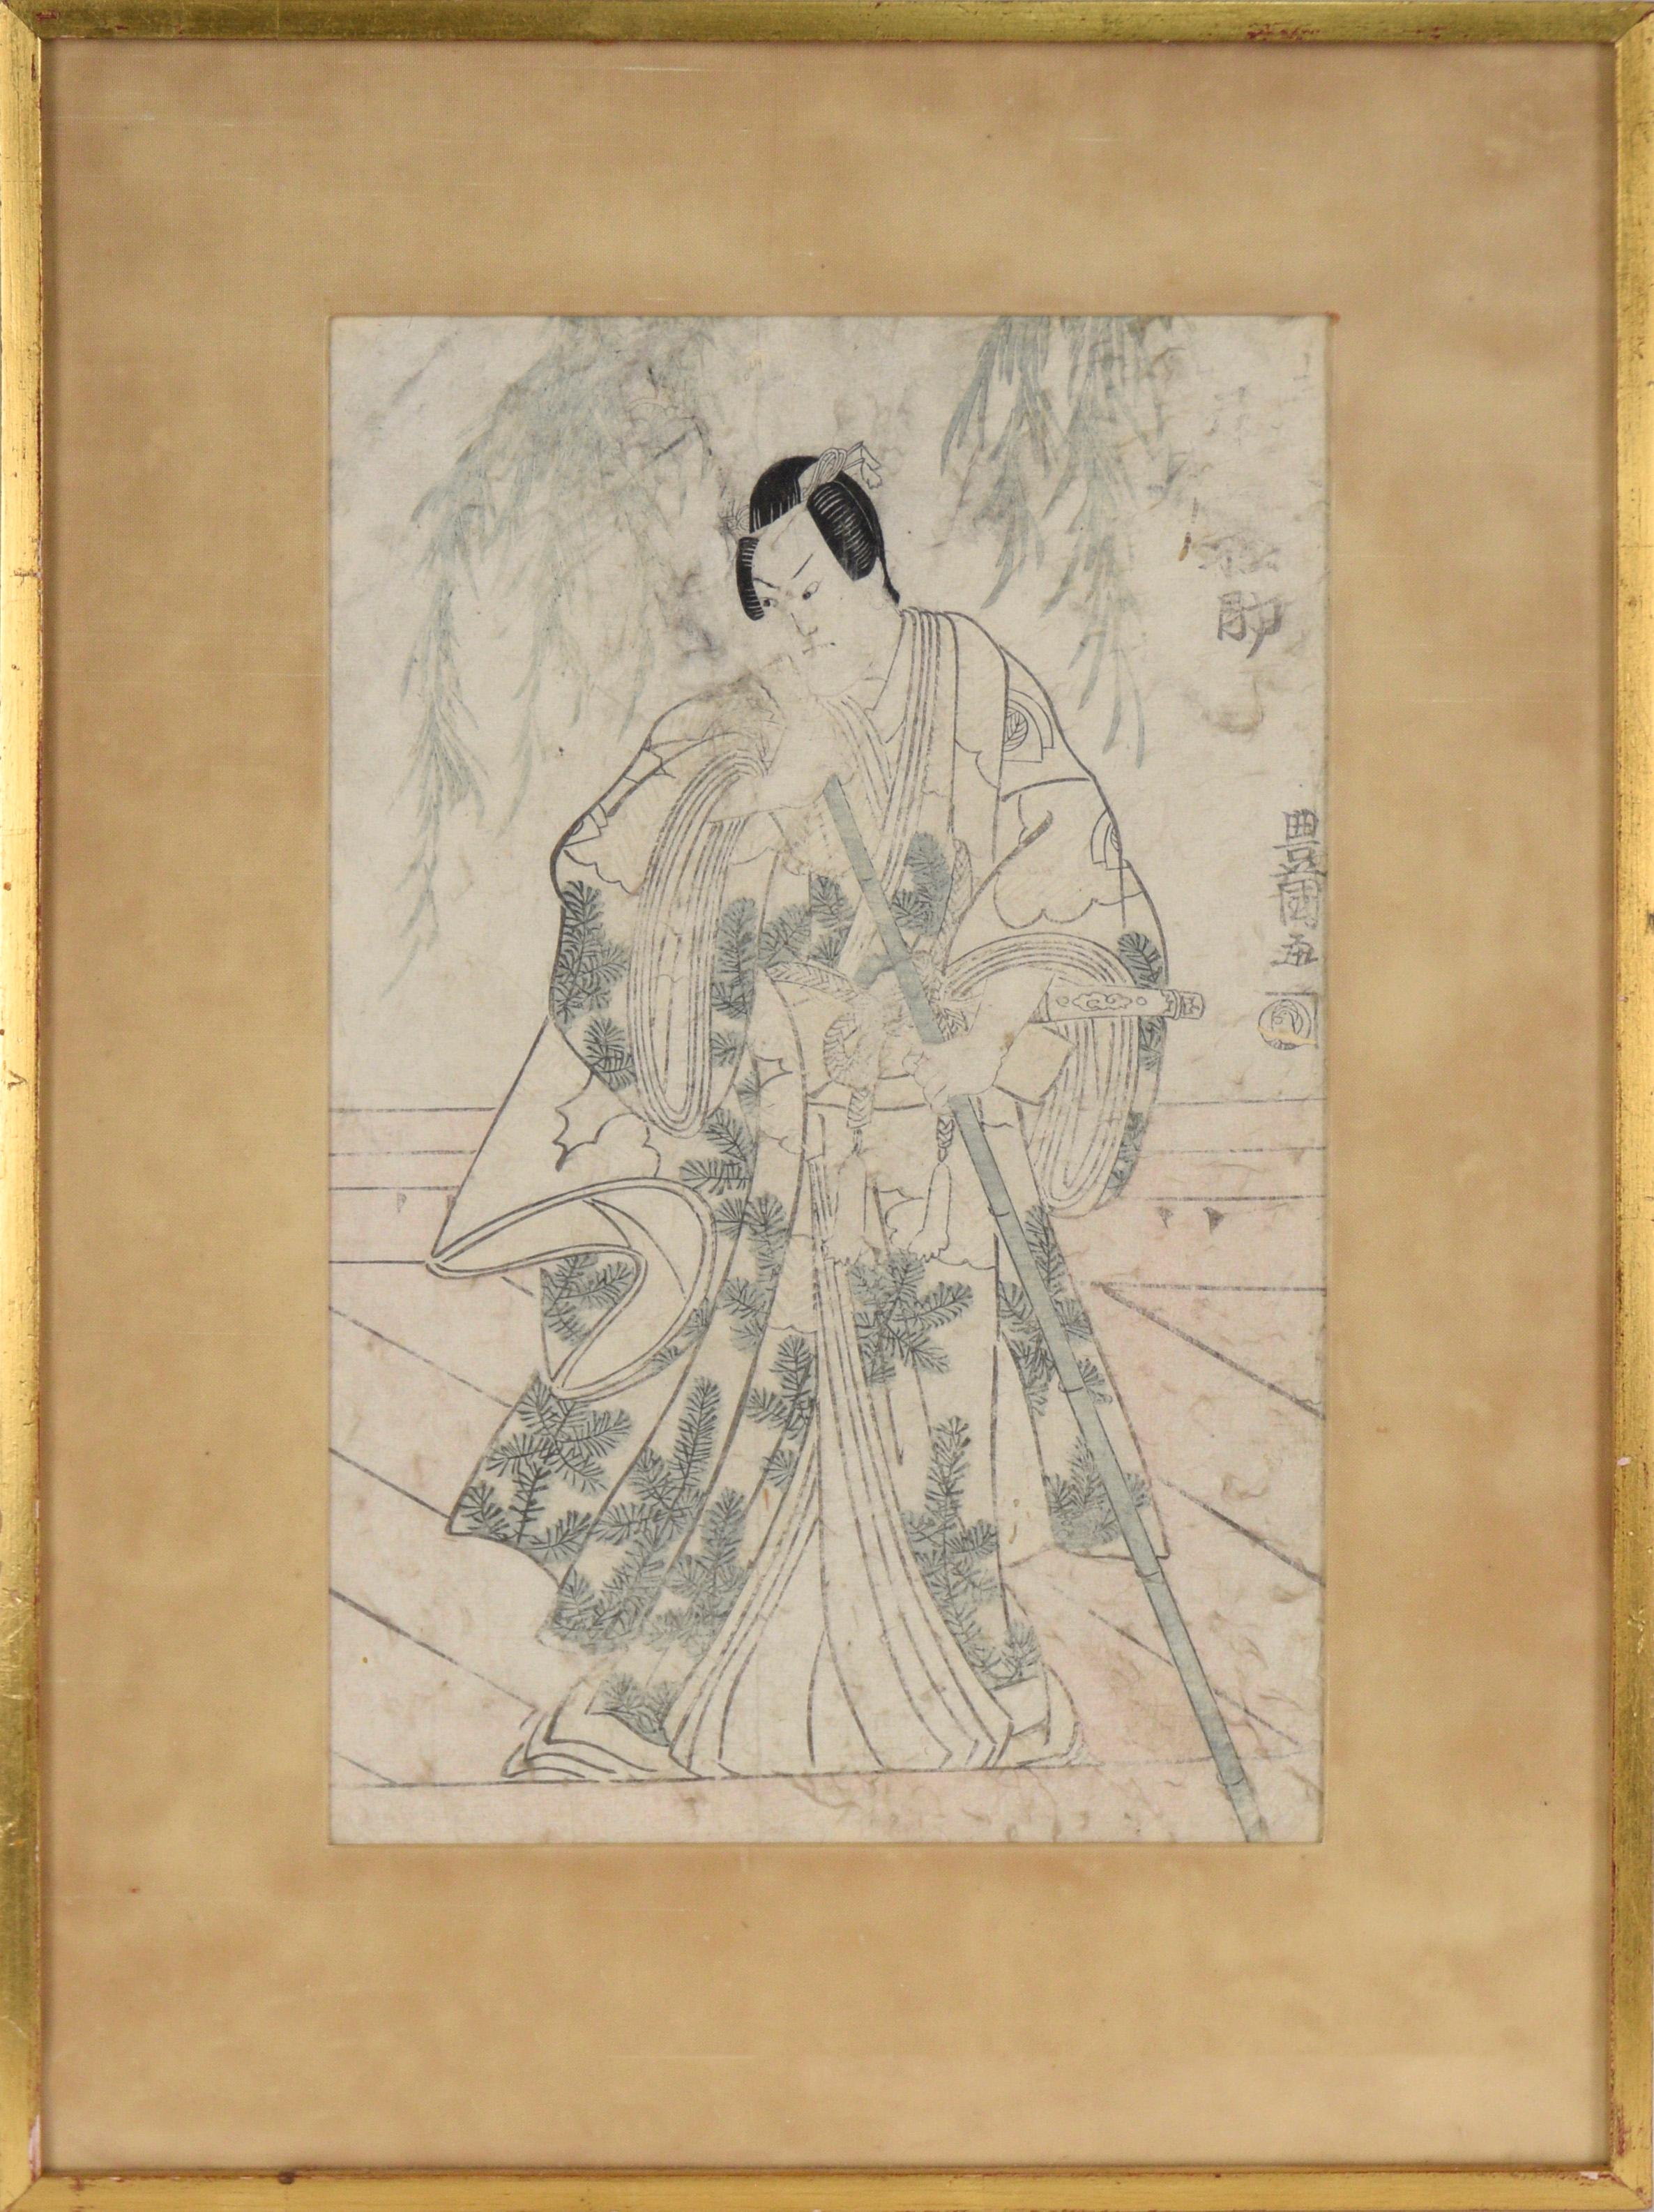 Kabuki Actor with Pine-Patterned Robe - Japanese Woodblock Print